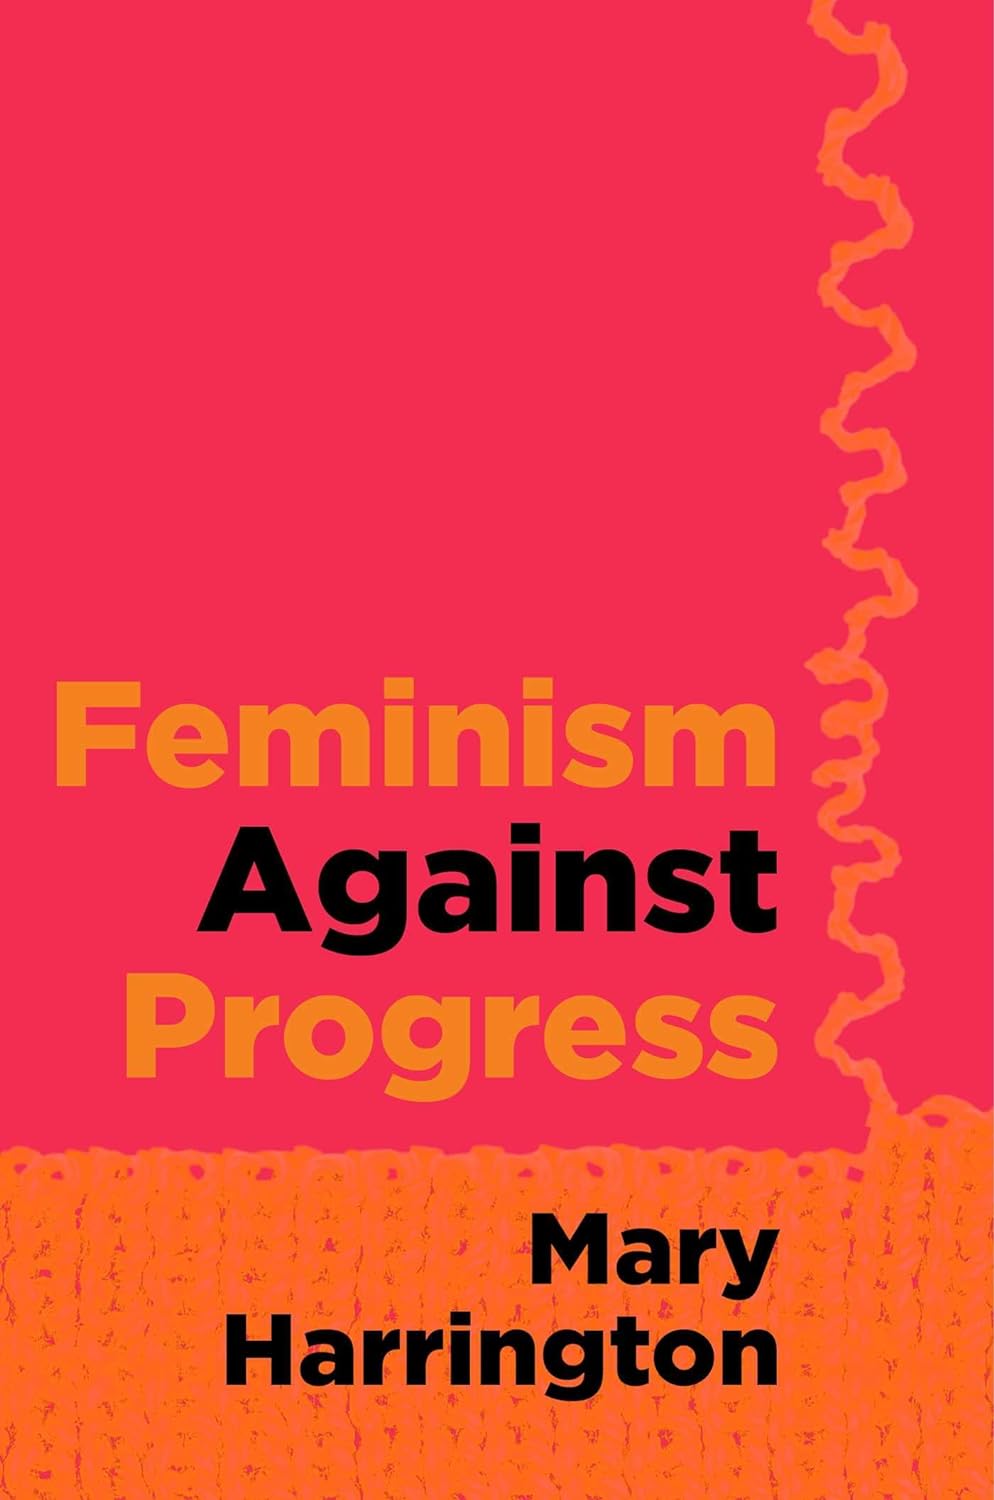 Book cover for "Feminism Against Progress," by Mary Harrington